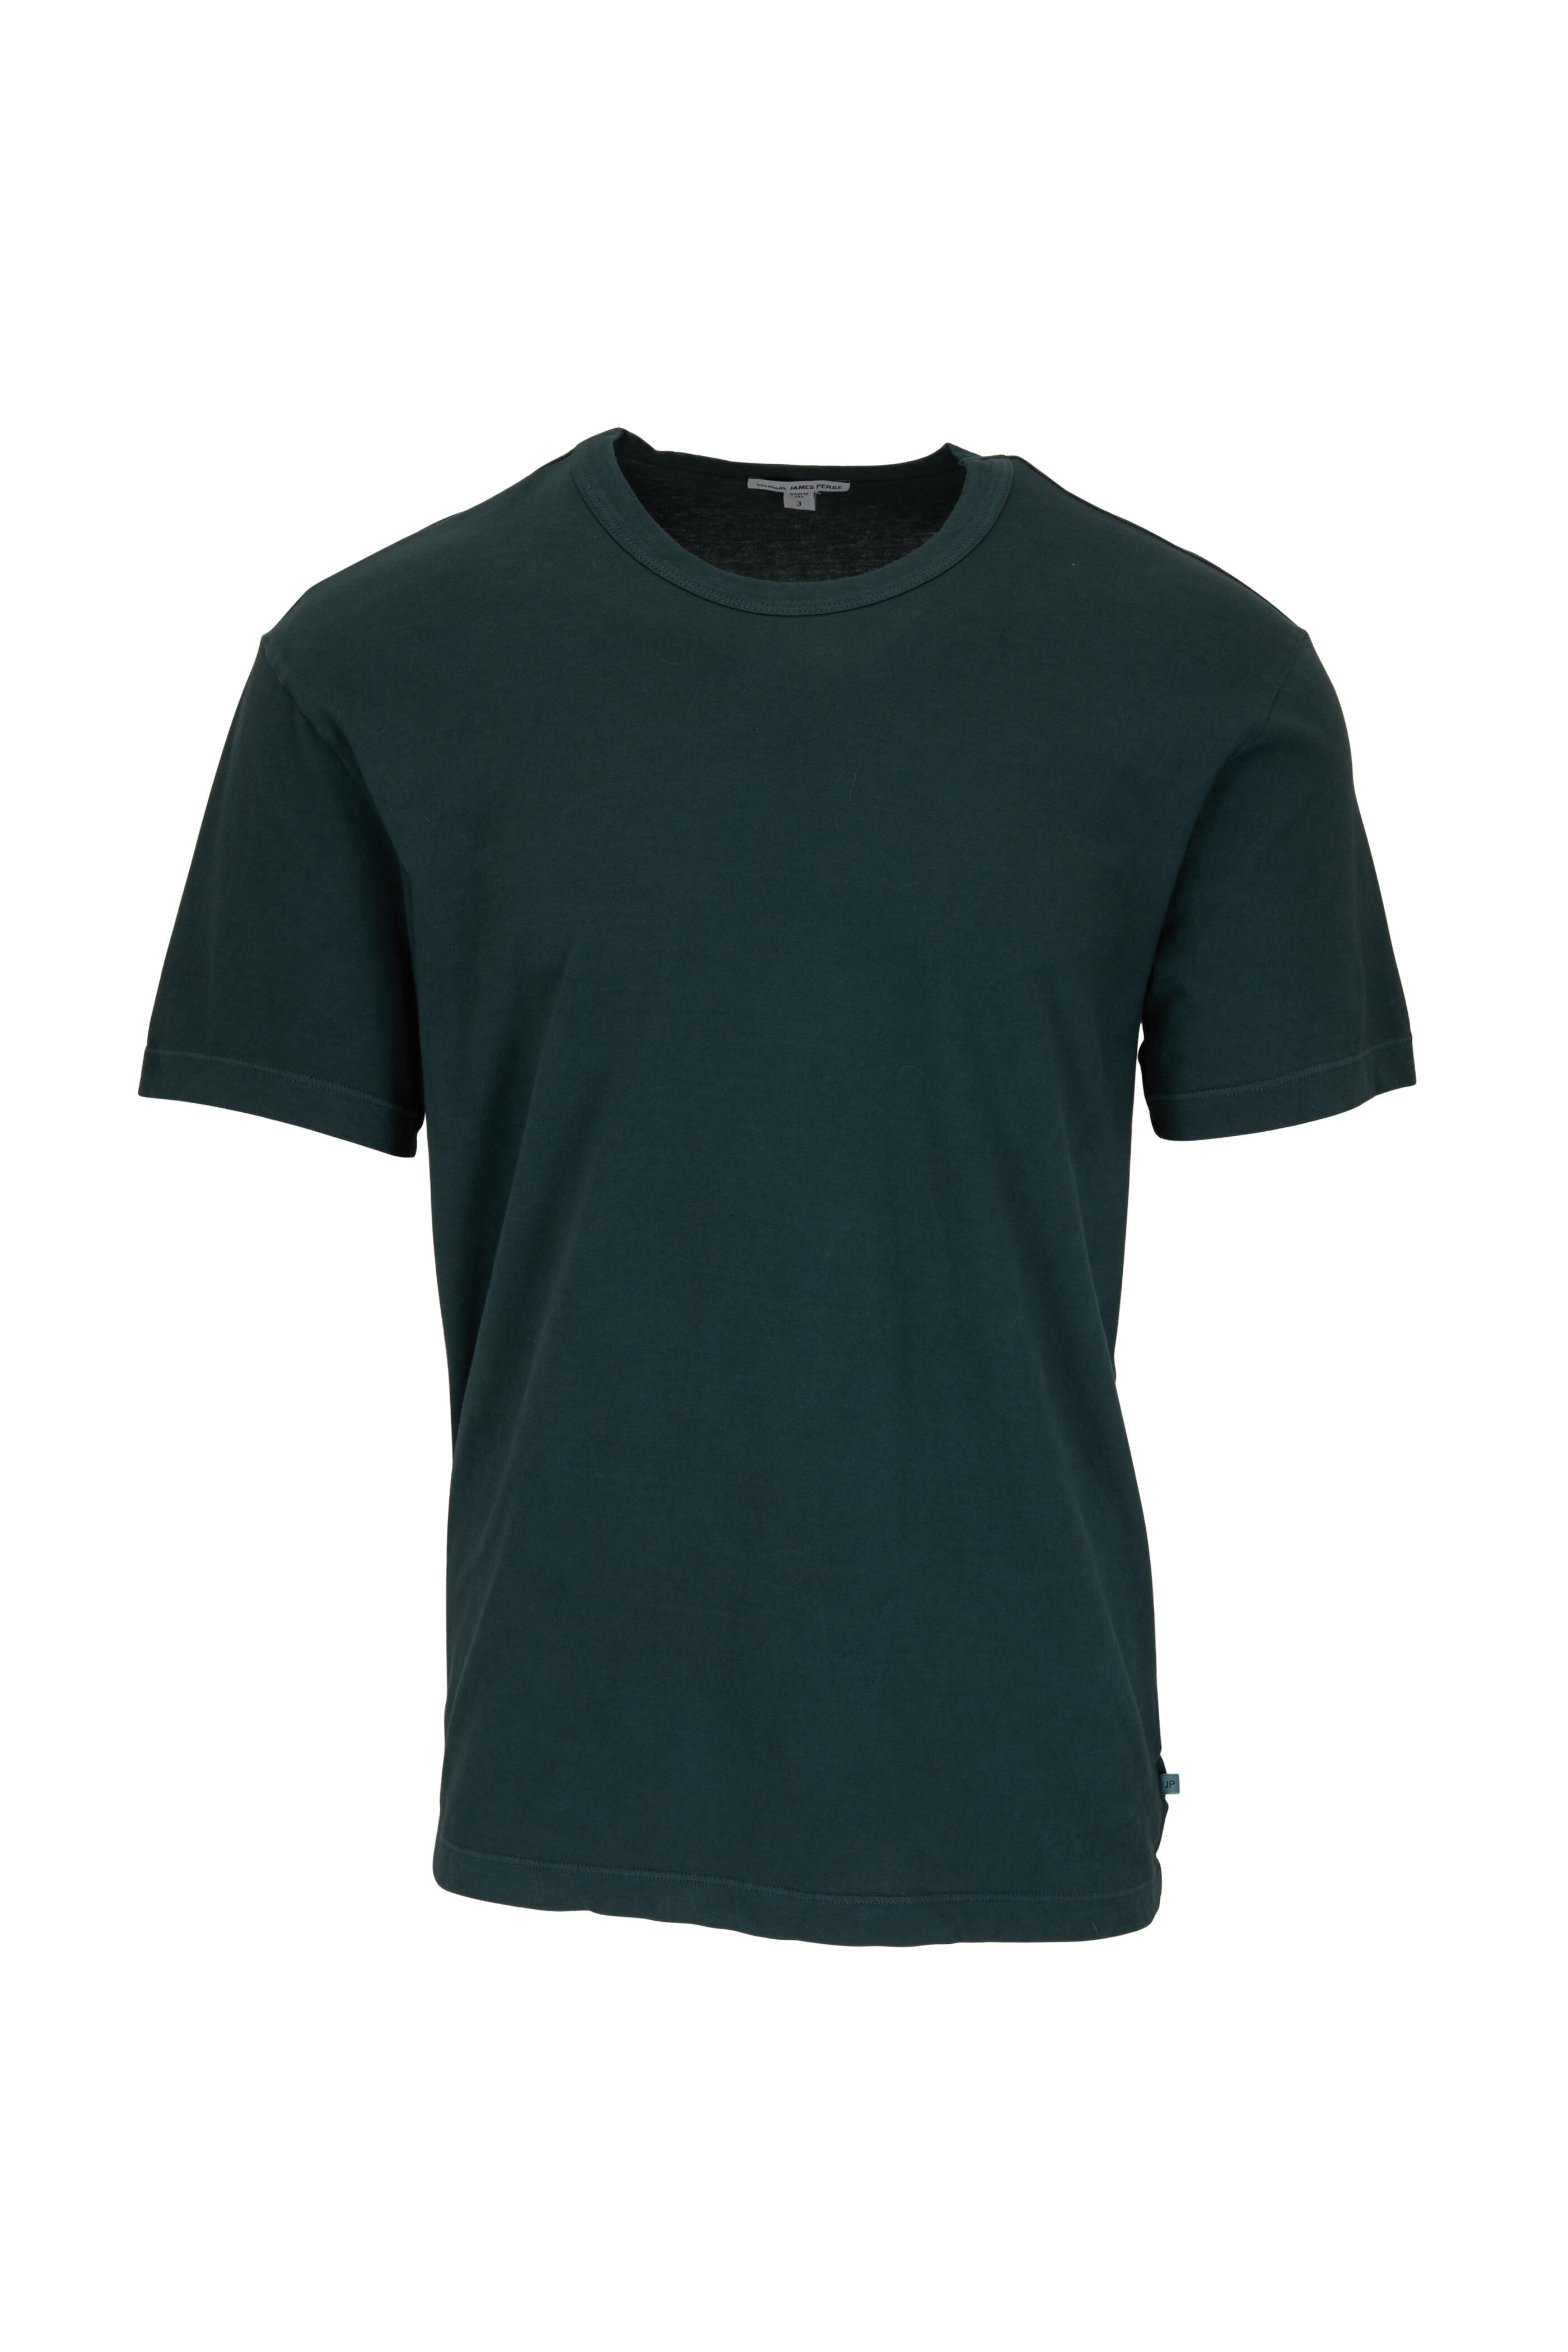 James Perse Deep V-Neck T-Shirt